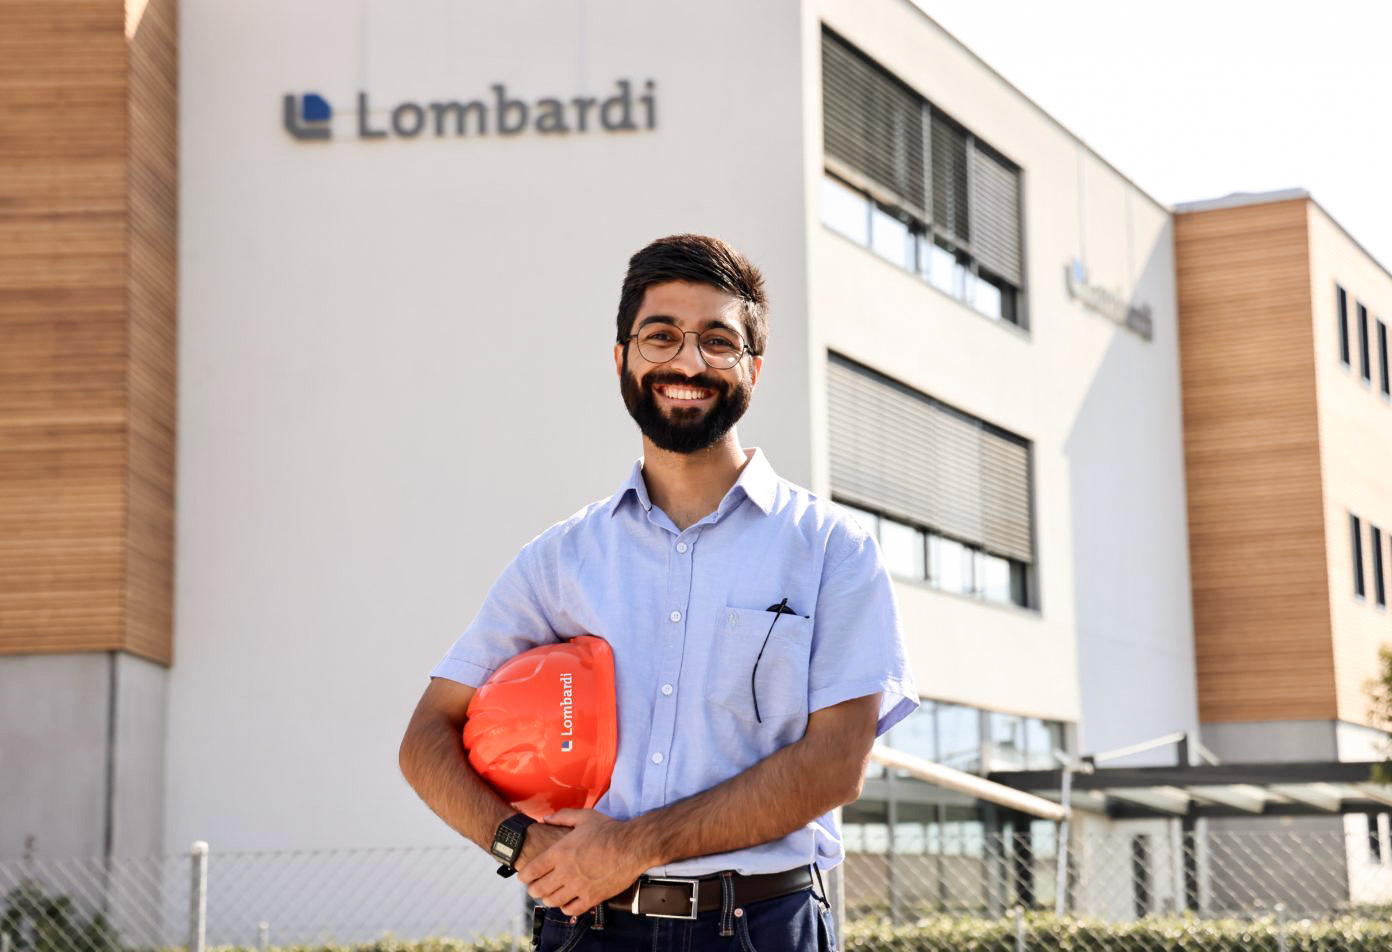 Lombardi careers benefits image bearbeitet